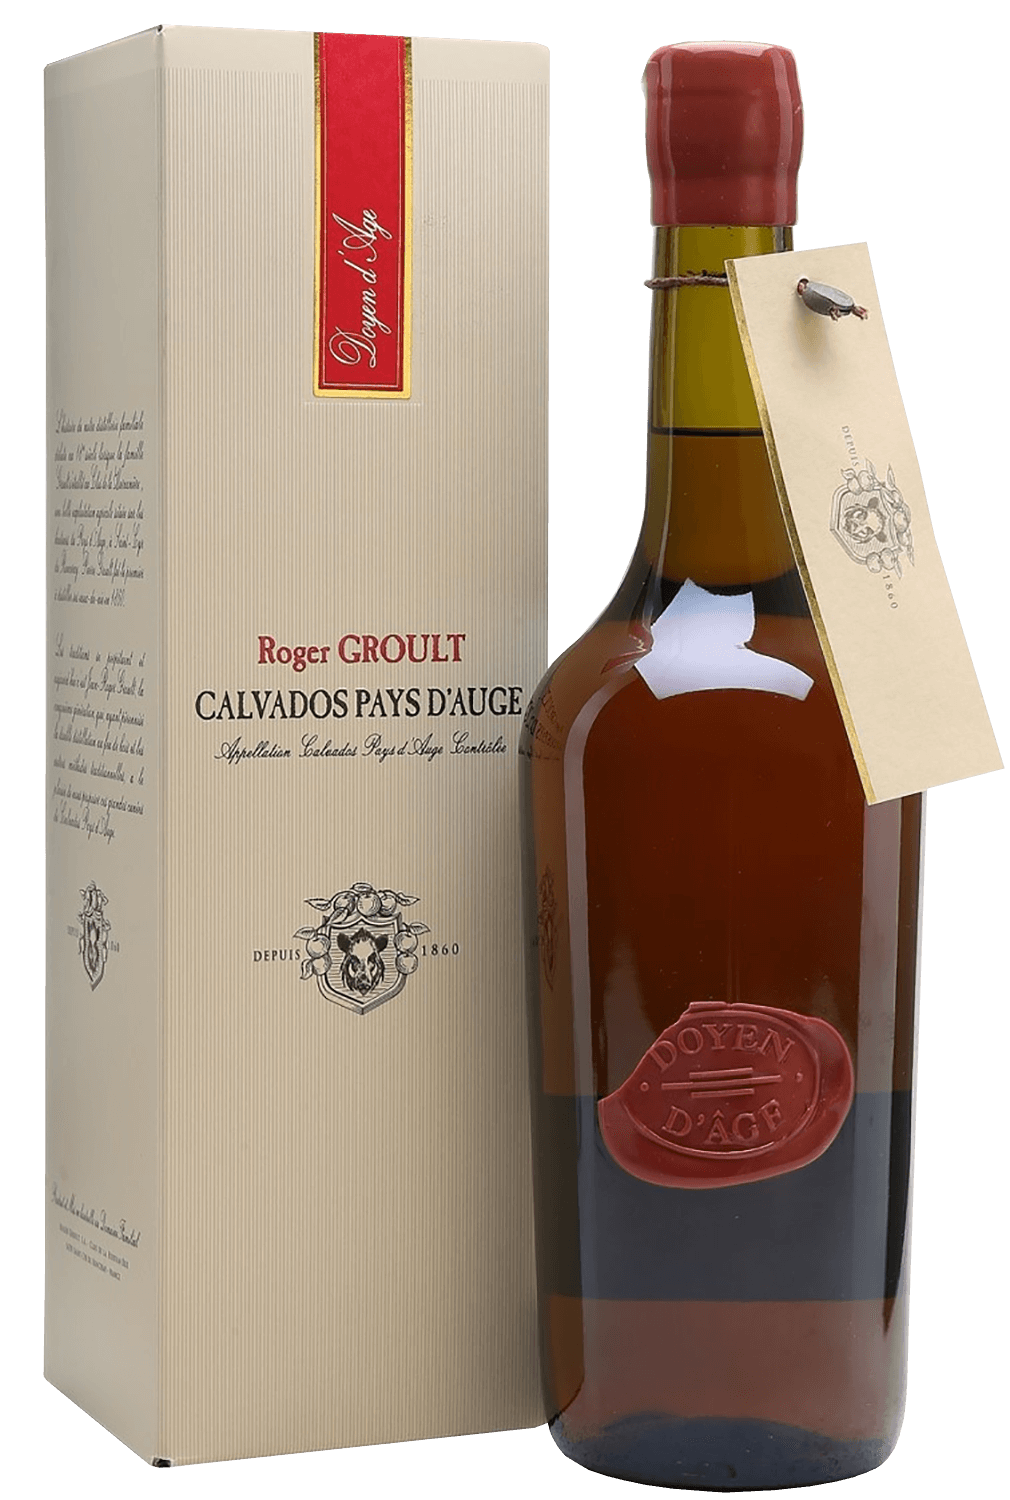 Doyen d'Or Calvados Pays D'Auge AOC Roger Groult (gift box) calvados pays d auge aoc 12 ans roger groult gift box